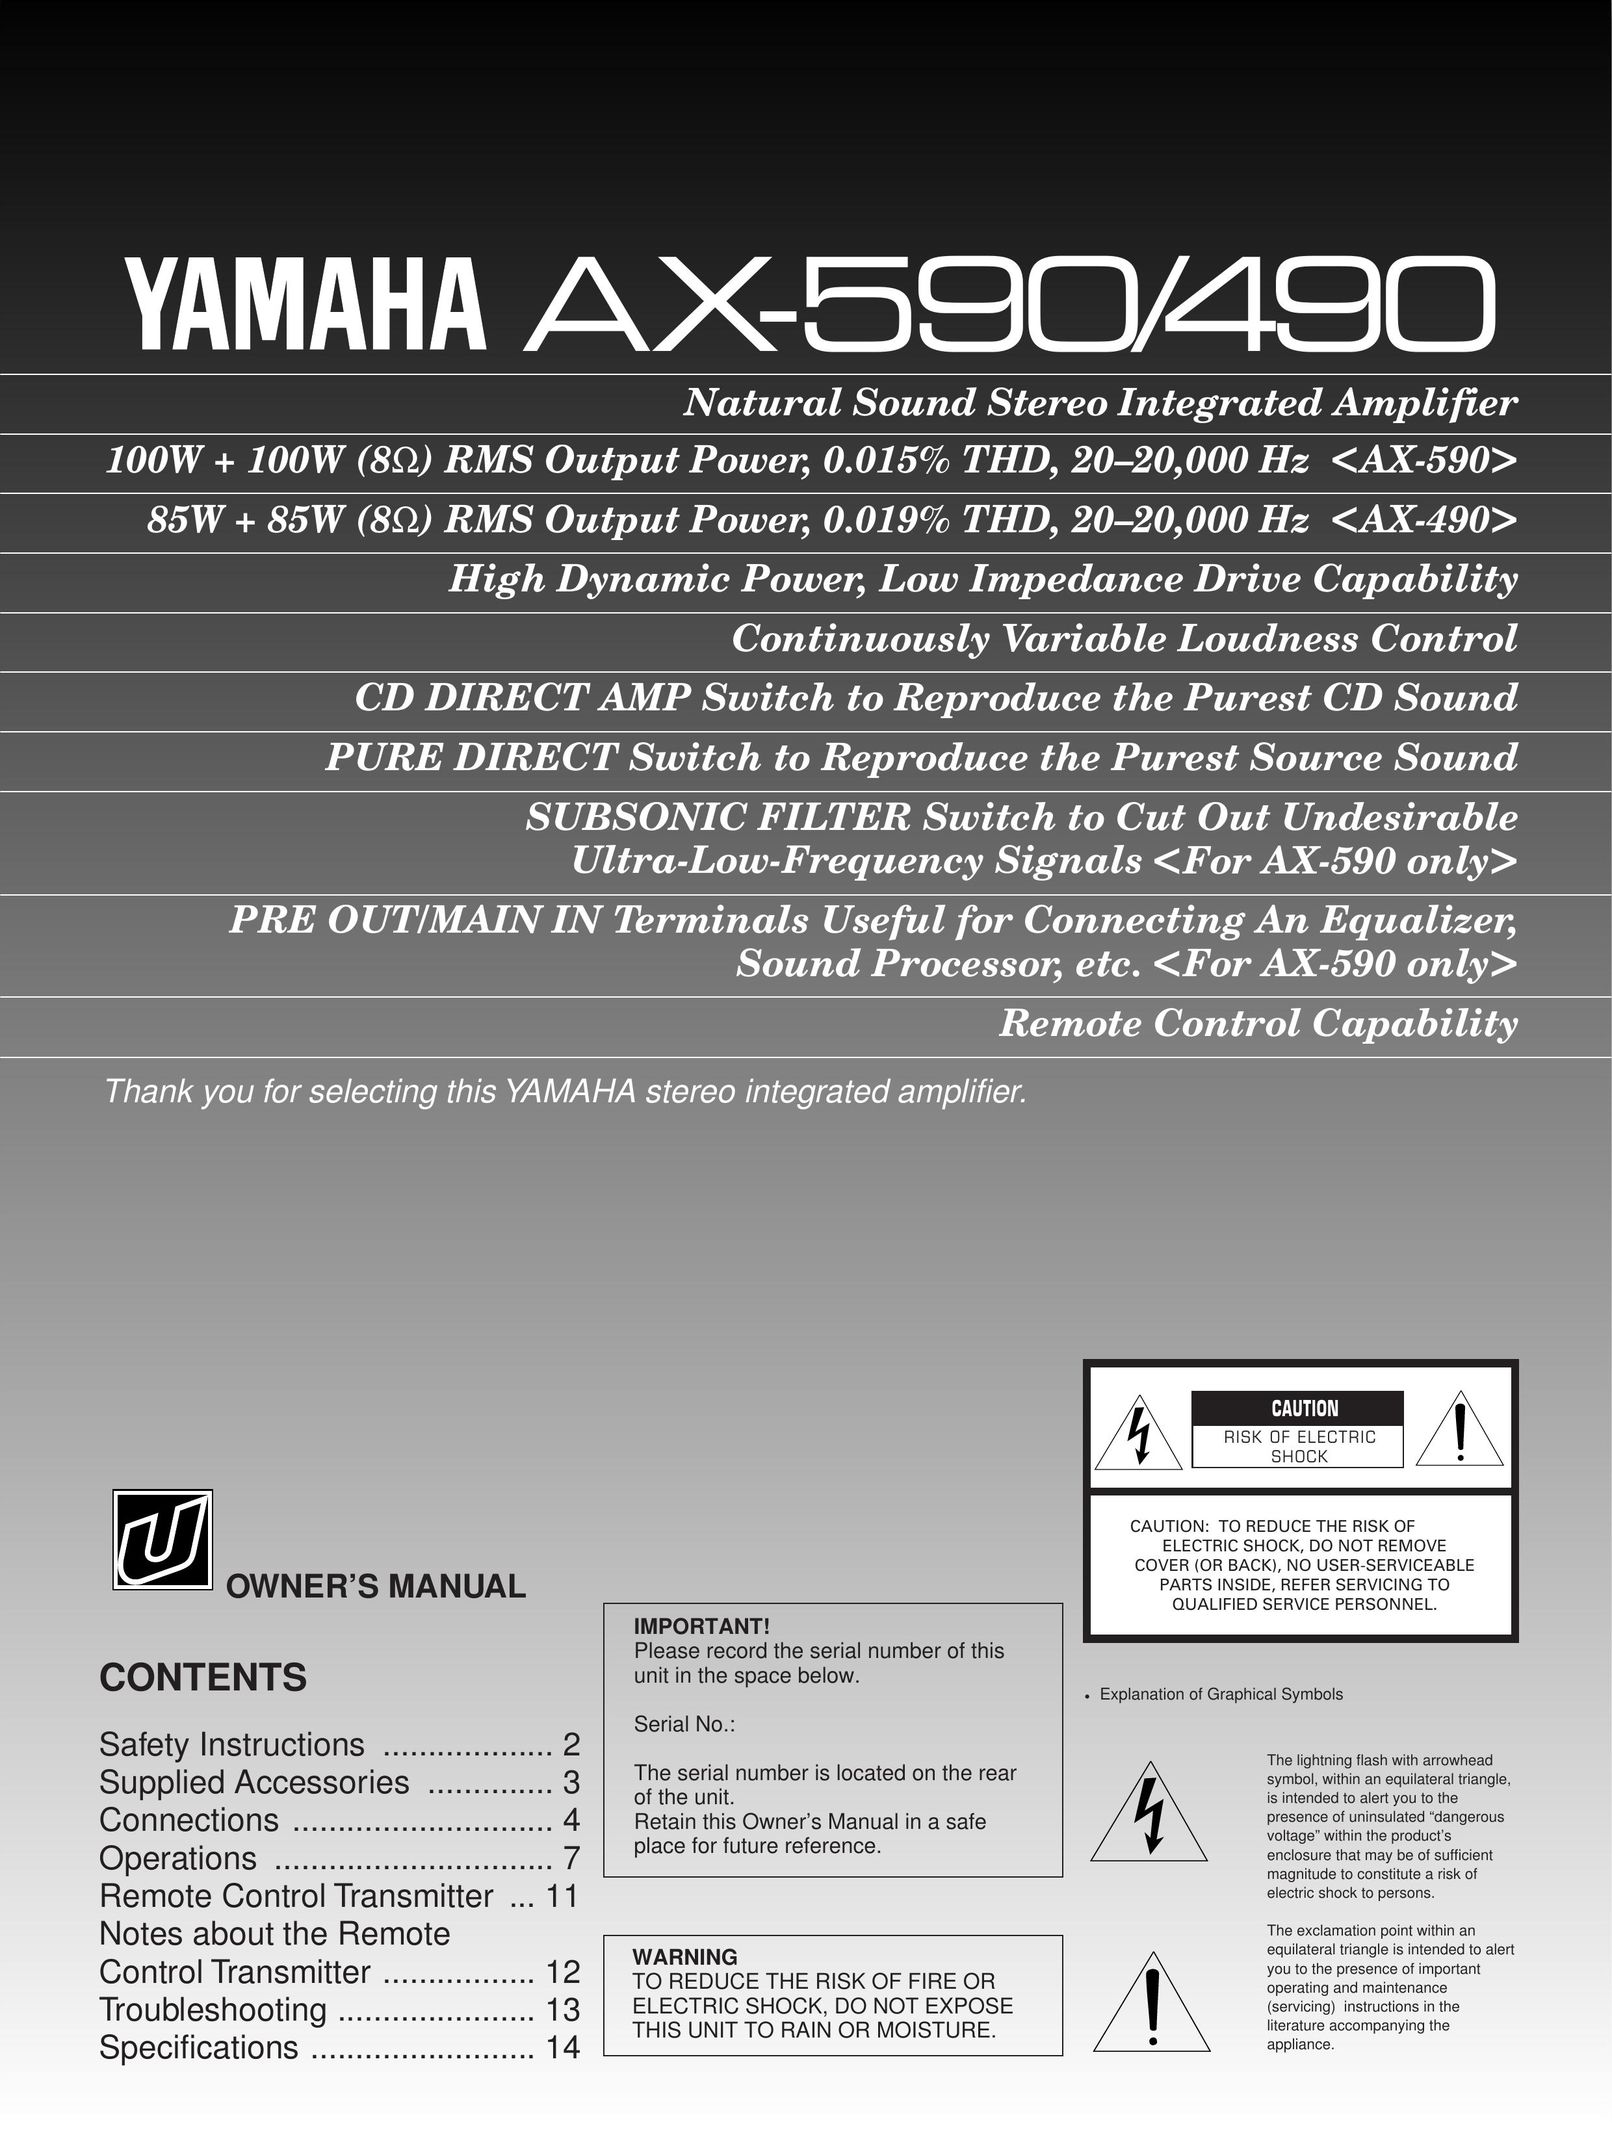 Yamaha AX-590 Stereo Amplifier User Manual